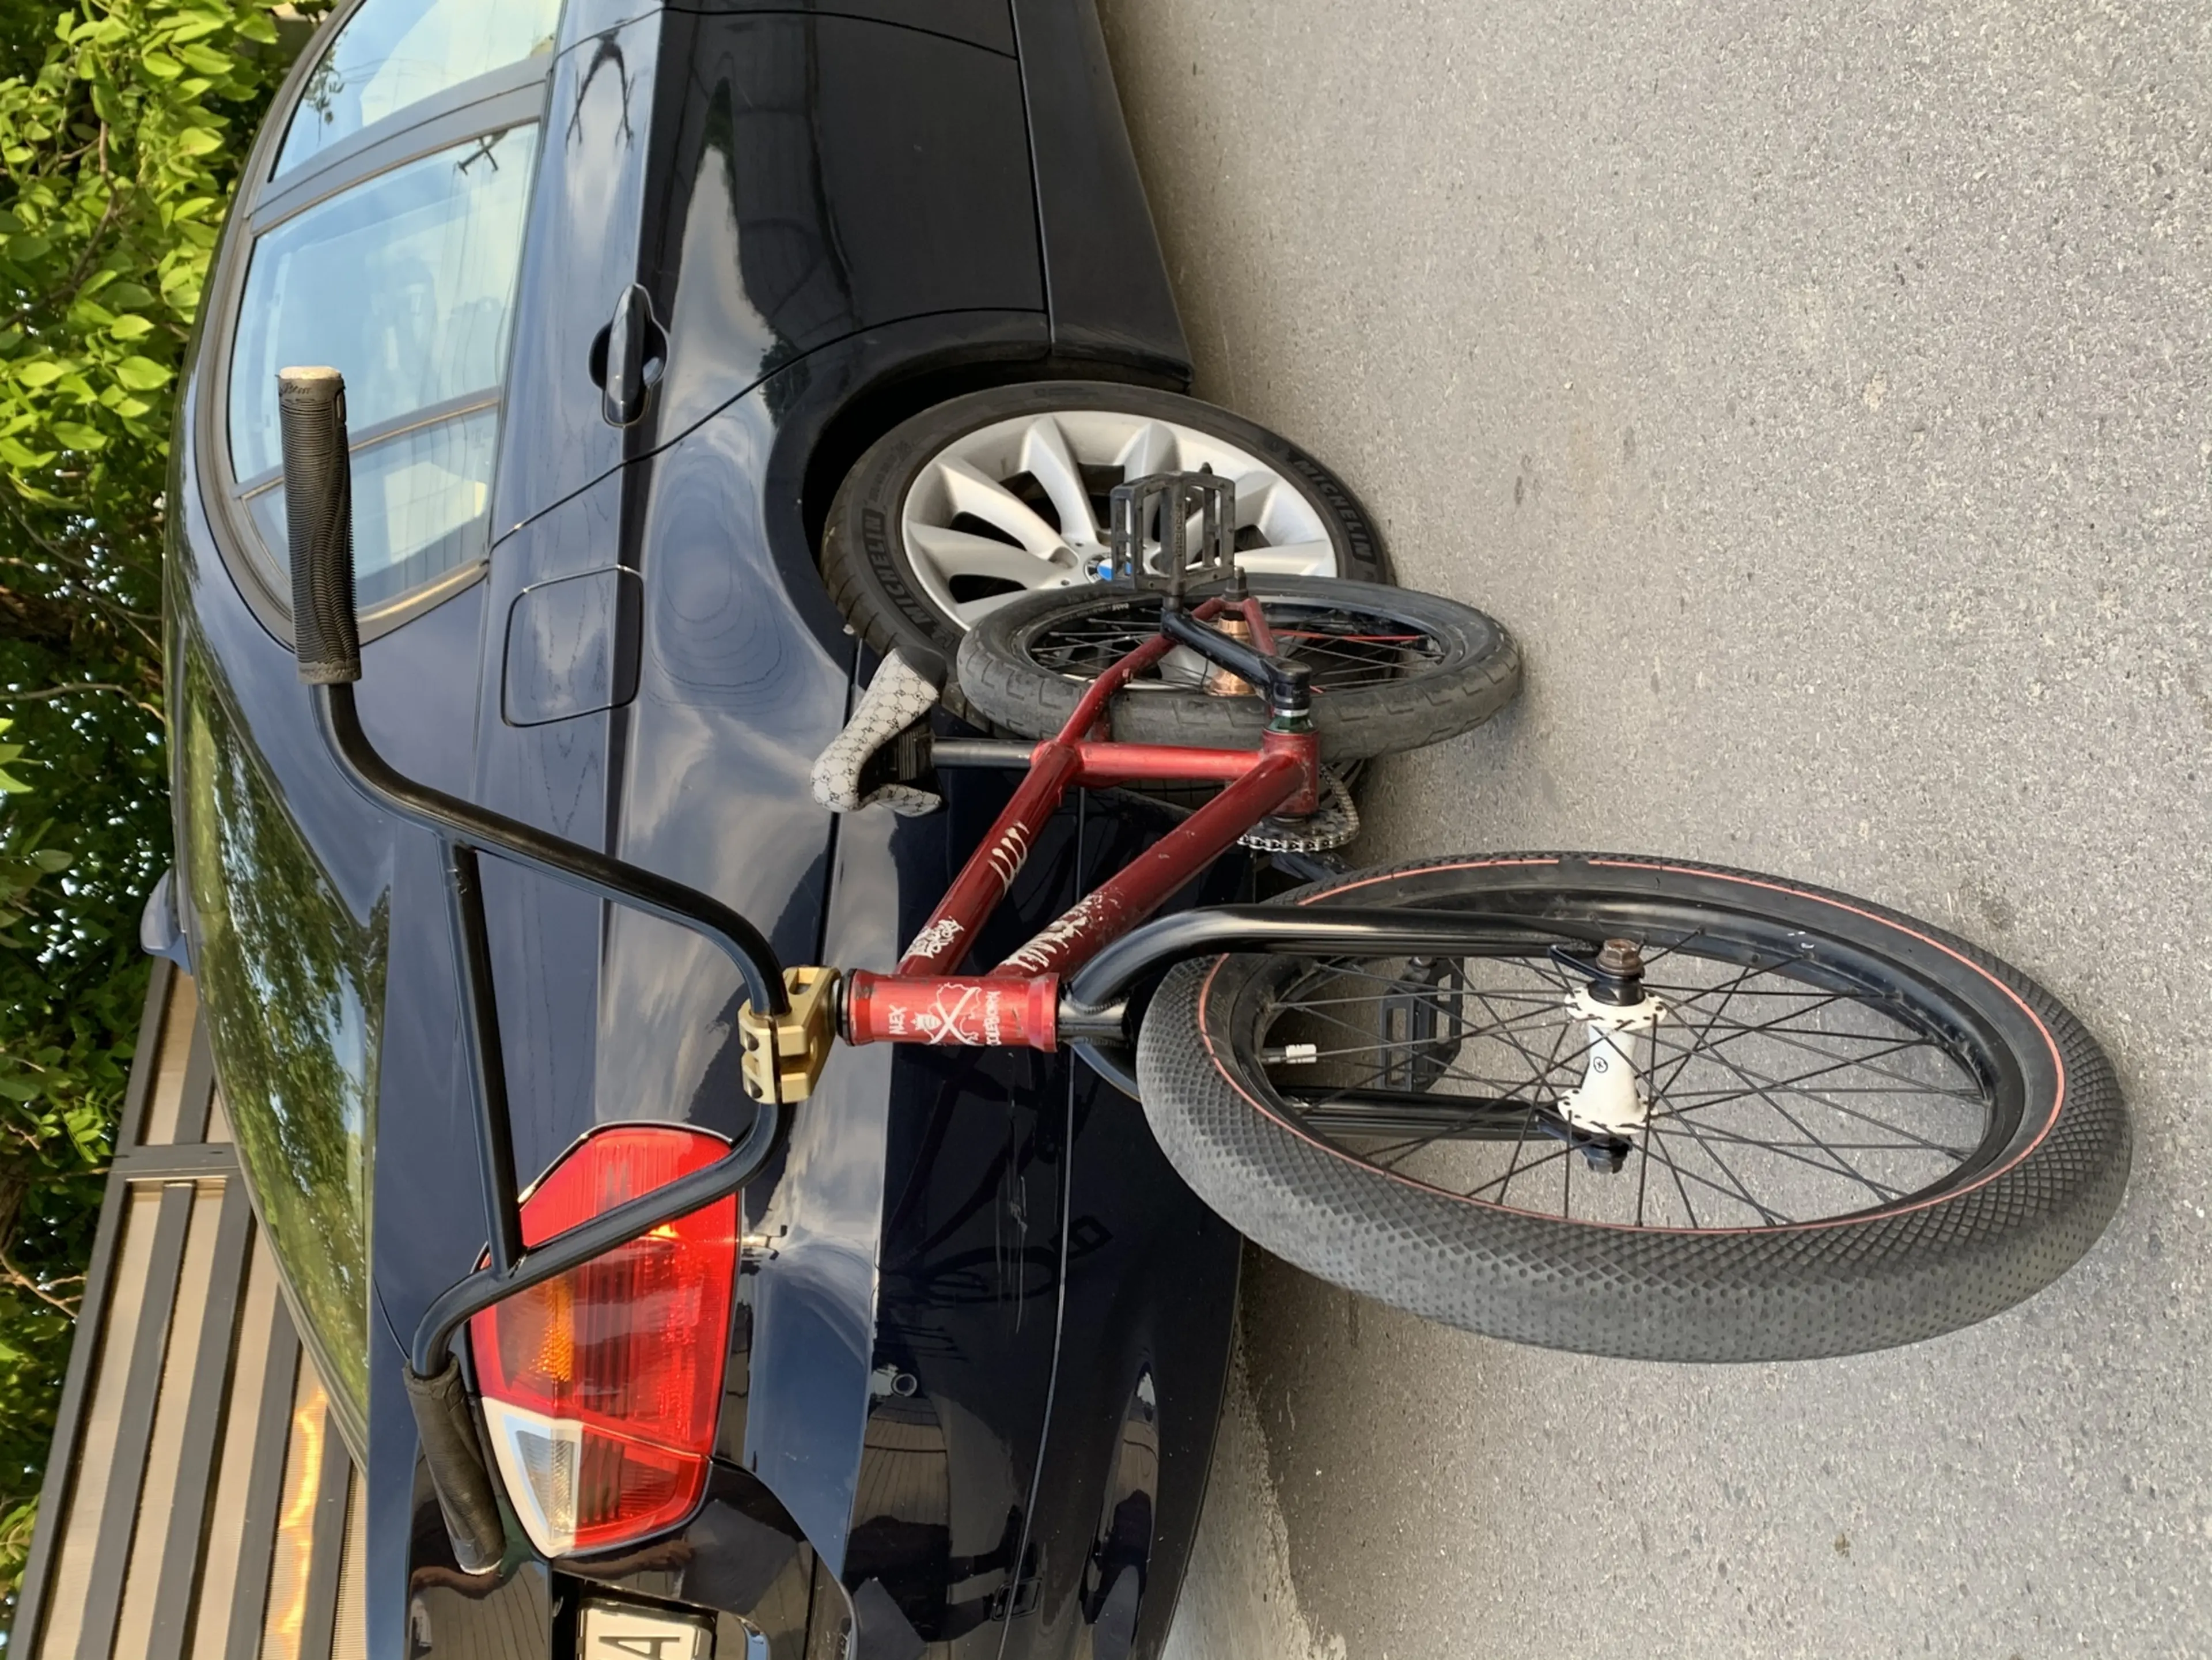 1. Bicicleta BMX custom